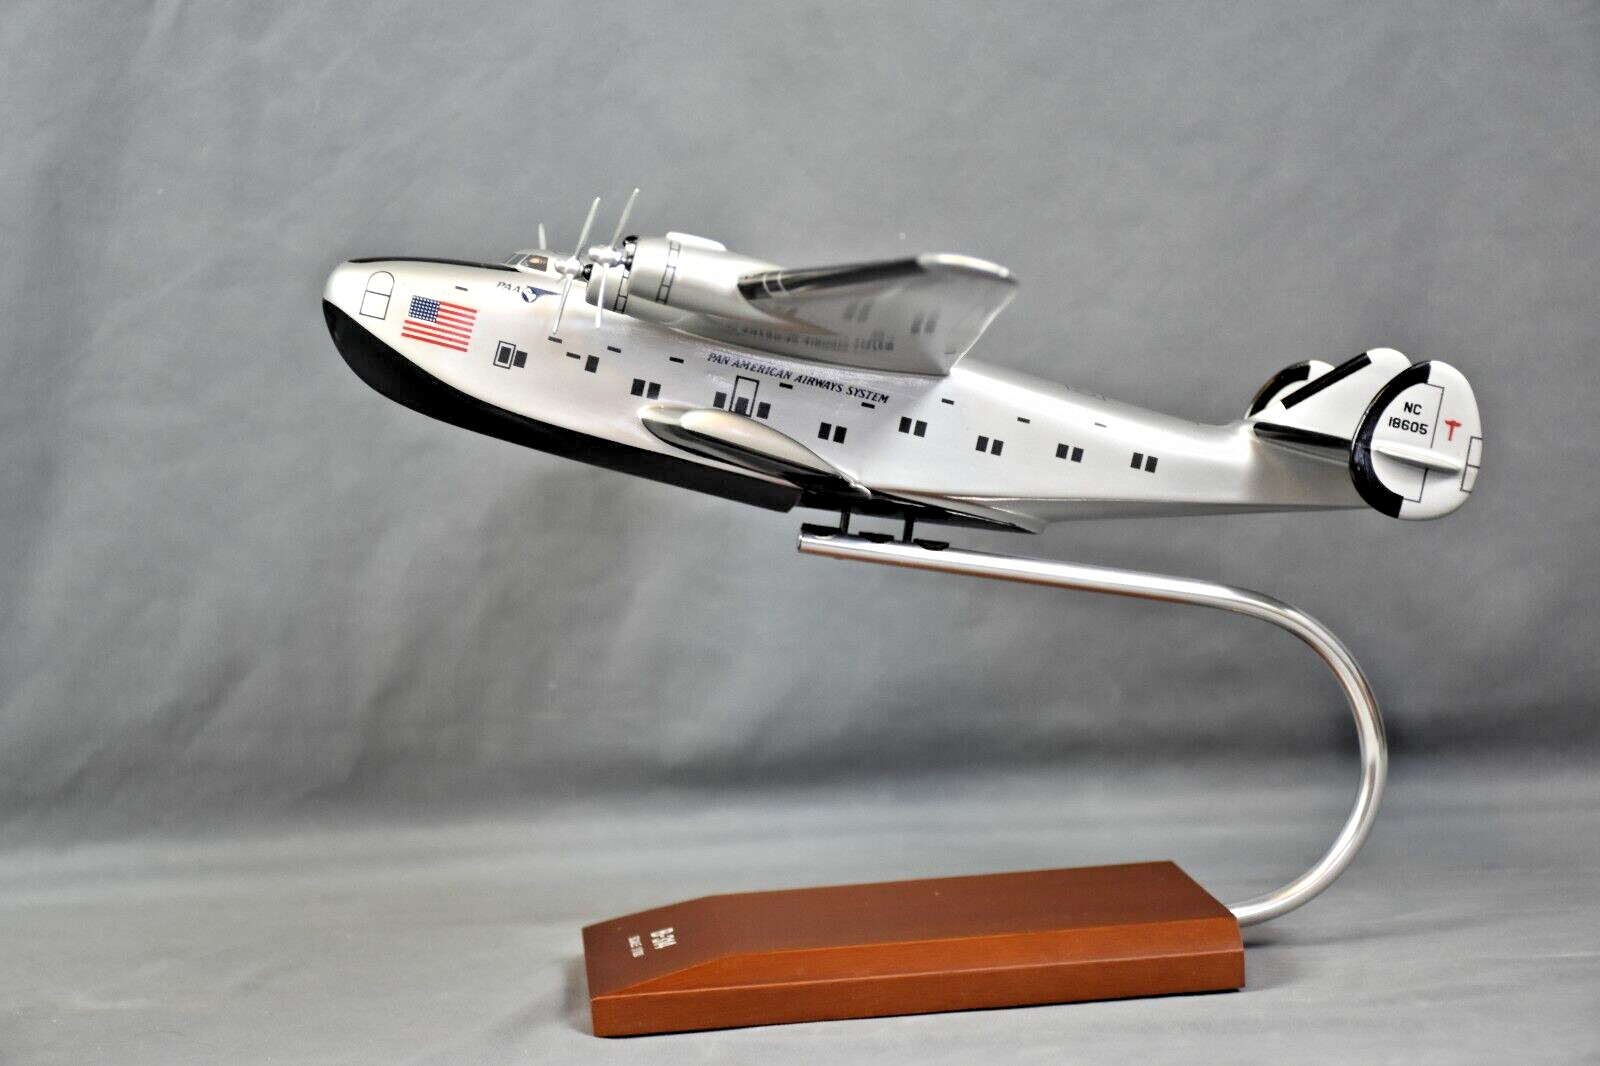 Pan Am B-314 Clipper Air Plane Model. Scale 1/100, Item G0310, Executive Series